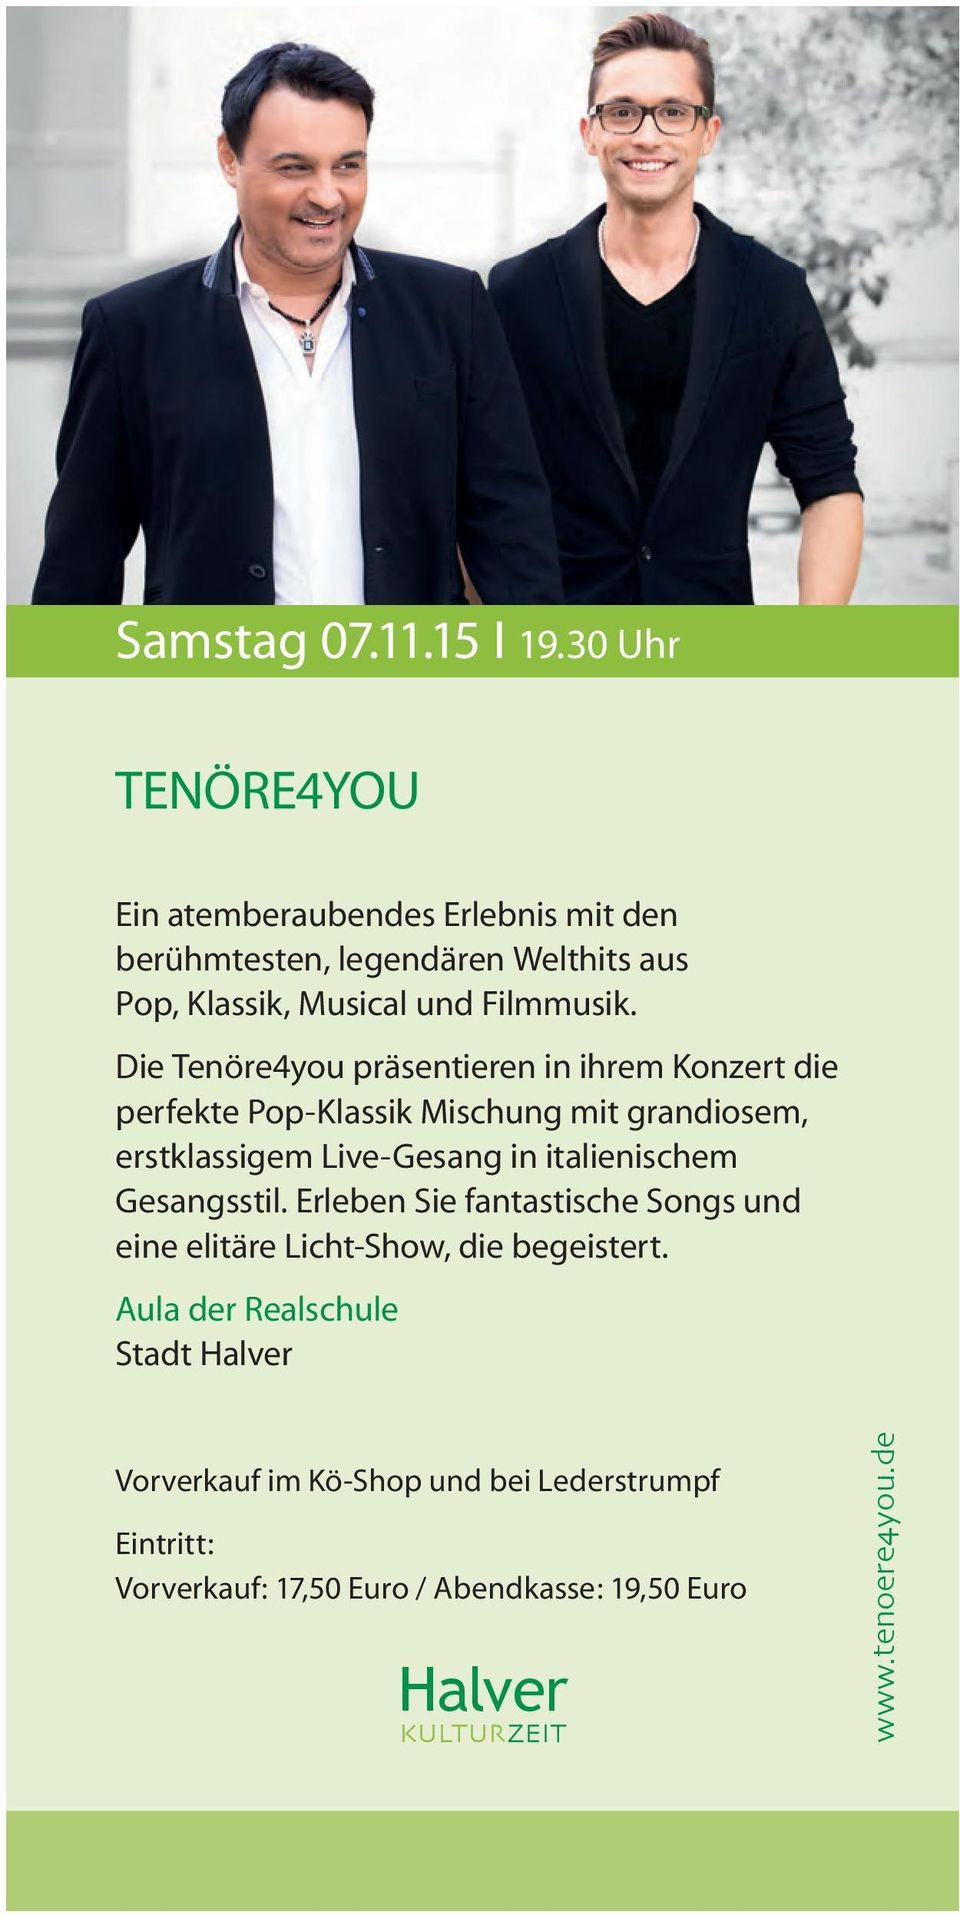 Die Tenöre4you präsentieren in ihrem Konzert die perfekte Pop-Klassik Mischung mit grandiosem, erstklassigem Live-Gesang in